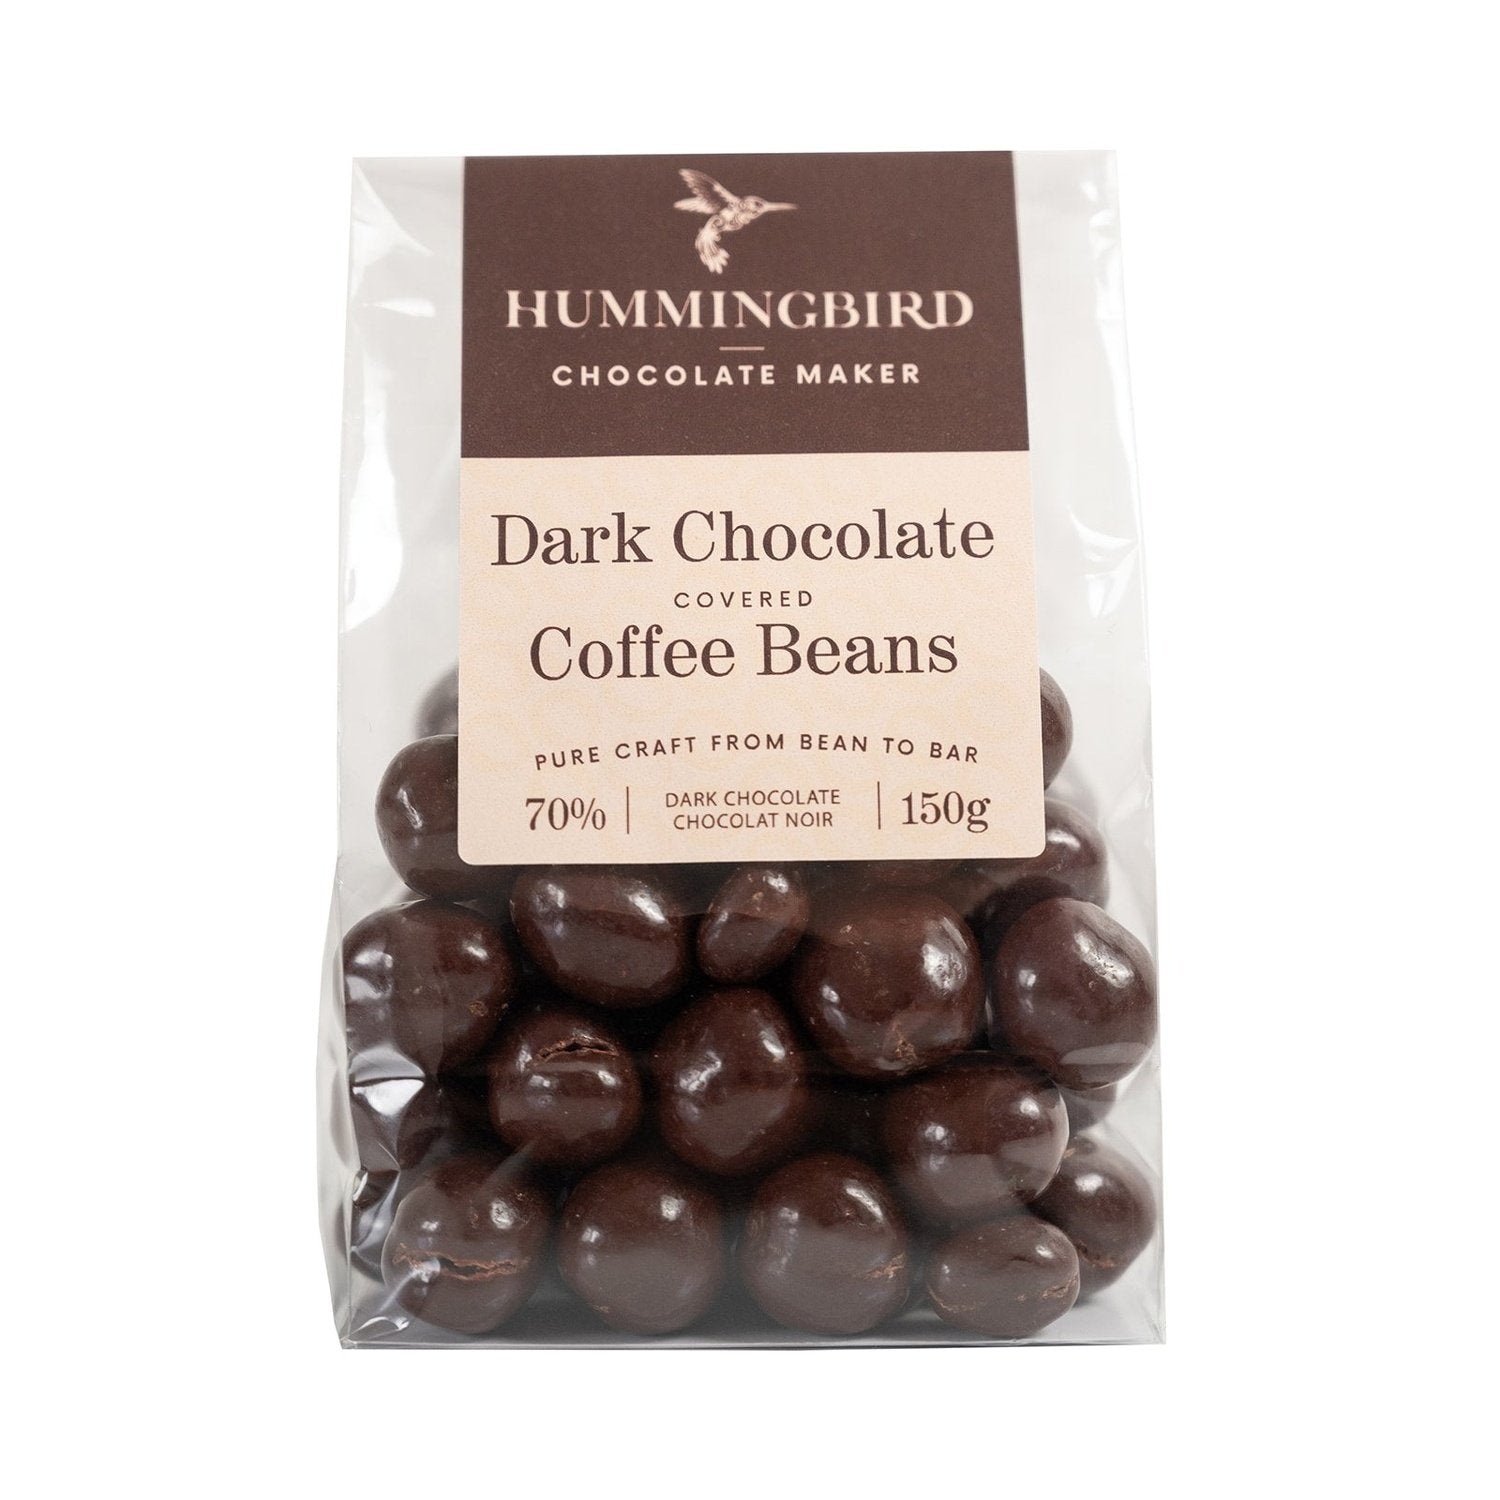 Hummingbird Chocolate Maker Dark Chocolate Covered Coffee Beans